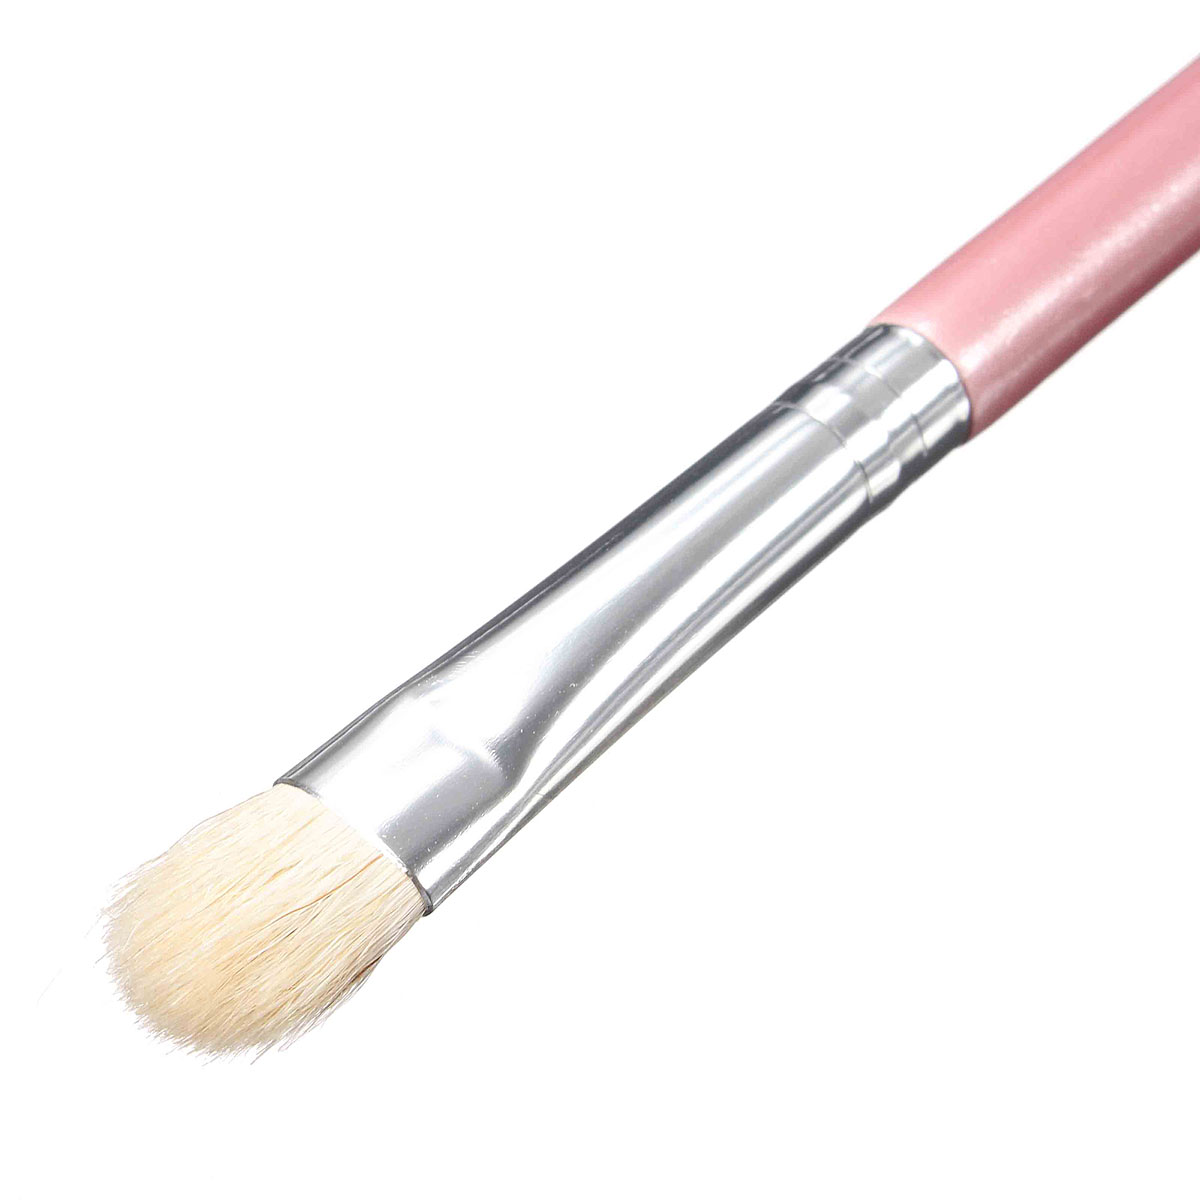 7pcs-Eye-Shadow-Powder-Brush-Shaping-Accurate-Eyeliner-Brow-Makeup-Brush-Cosmetics-Tools-Kit-1159391